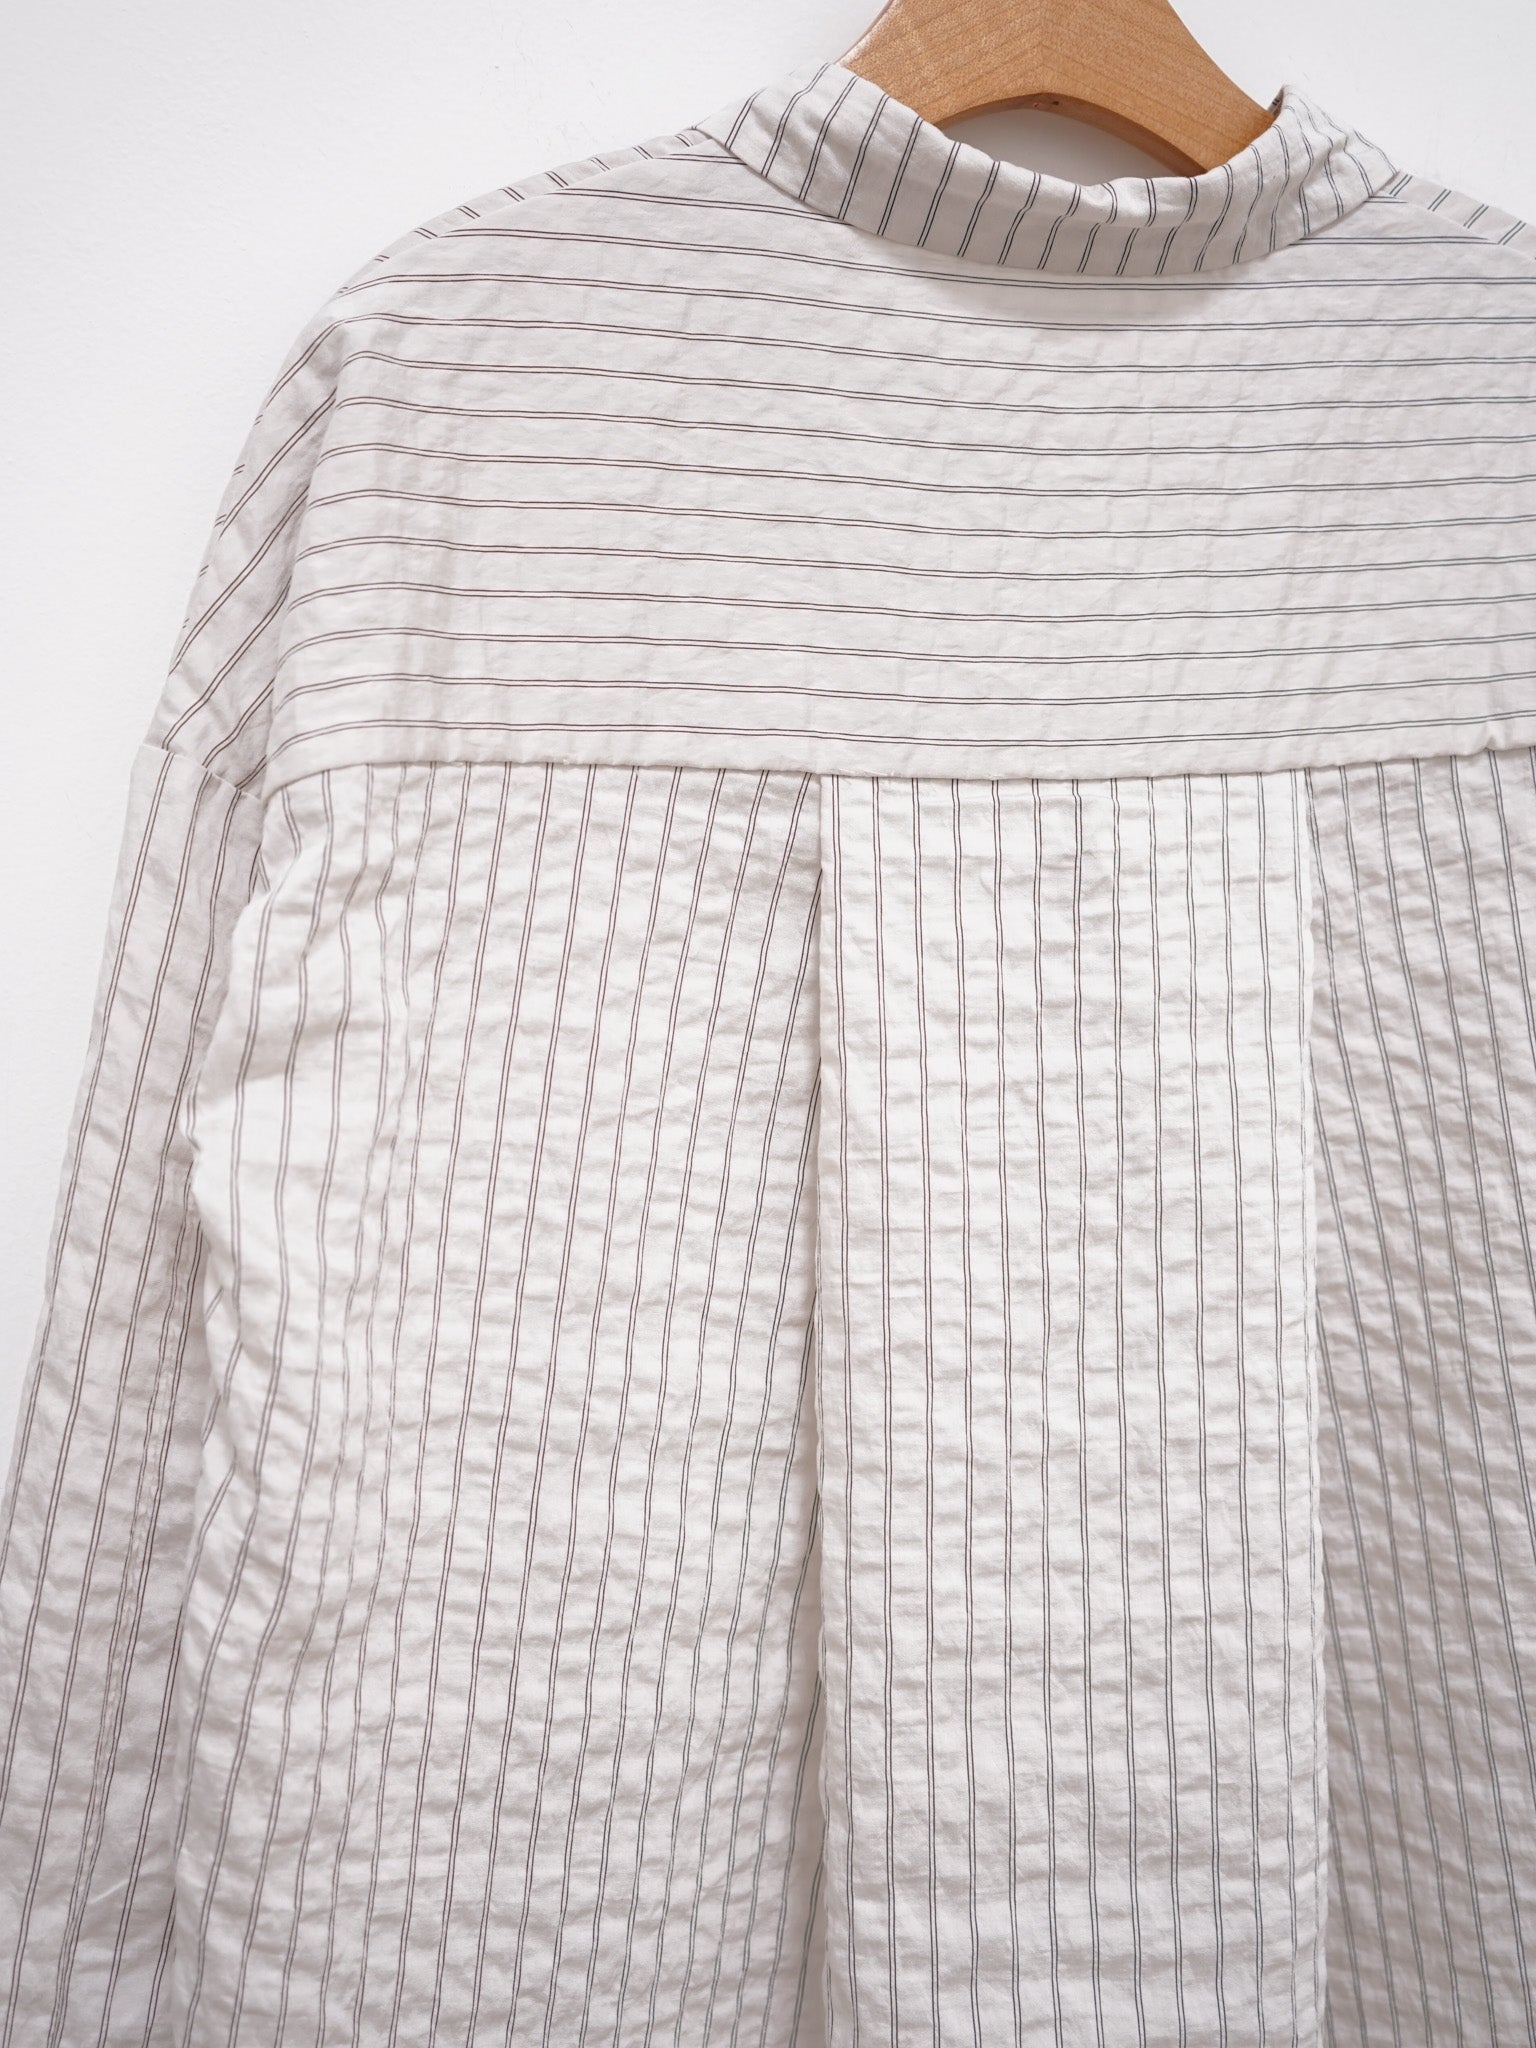 Namu Shop - Album di Famiglia Striped Short Collar Shirt - Off White